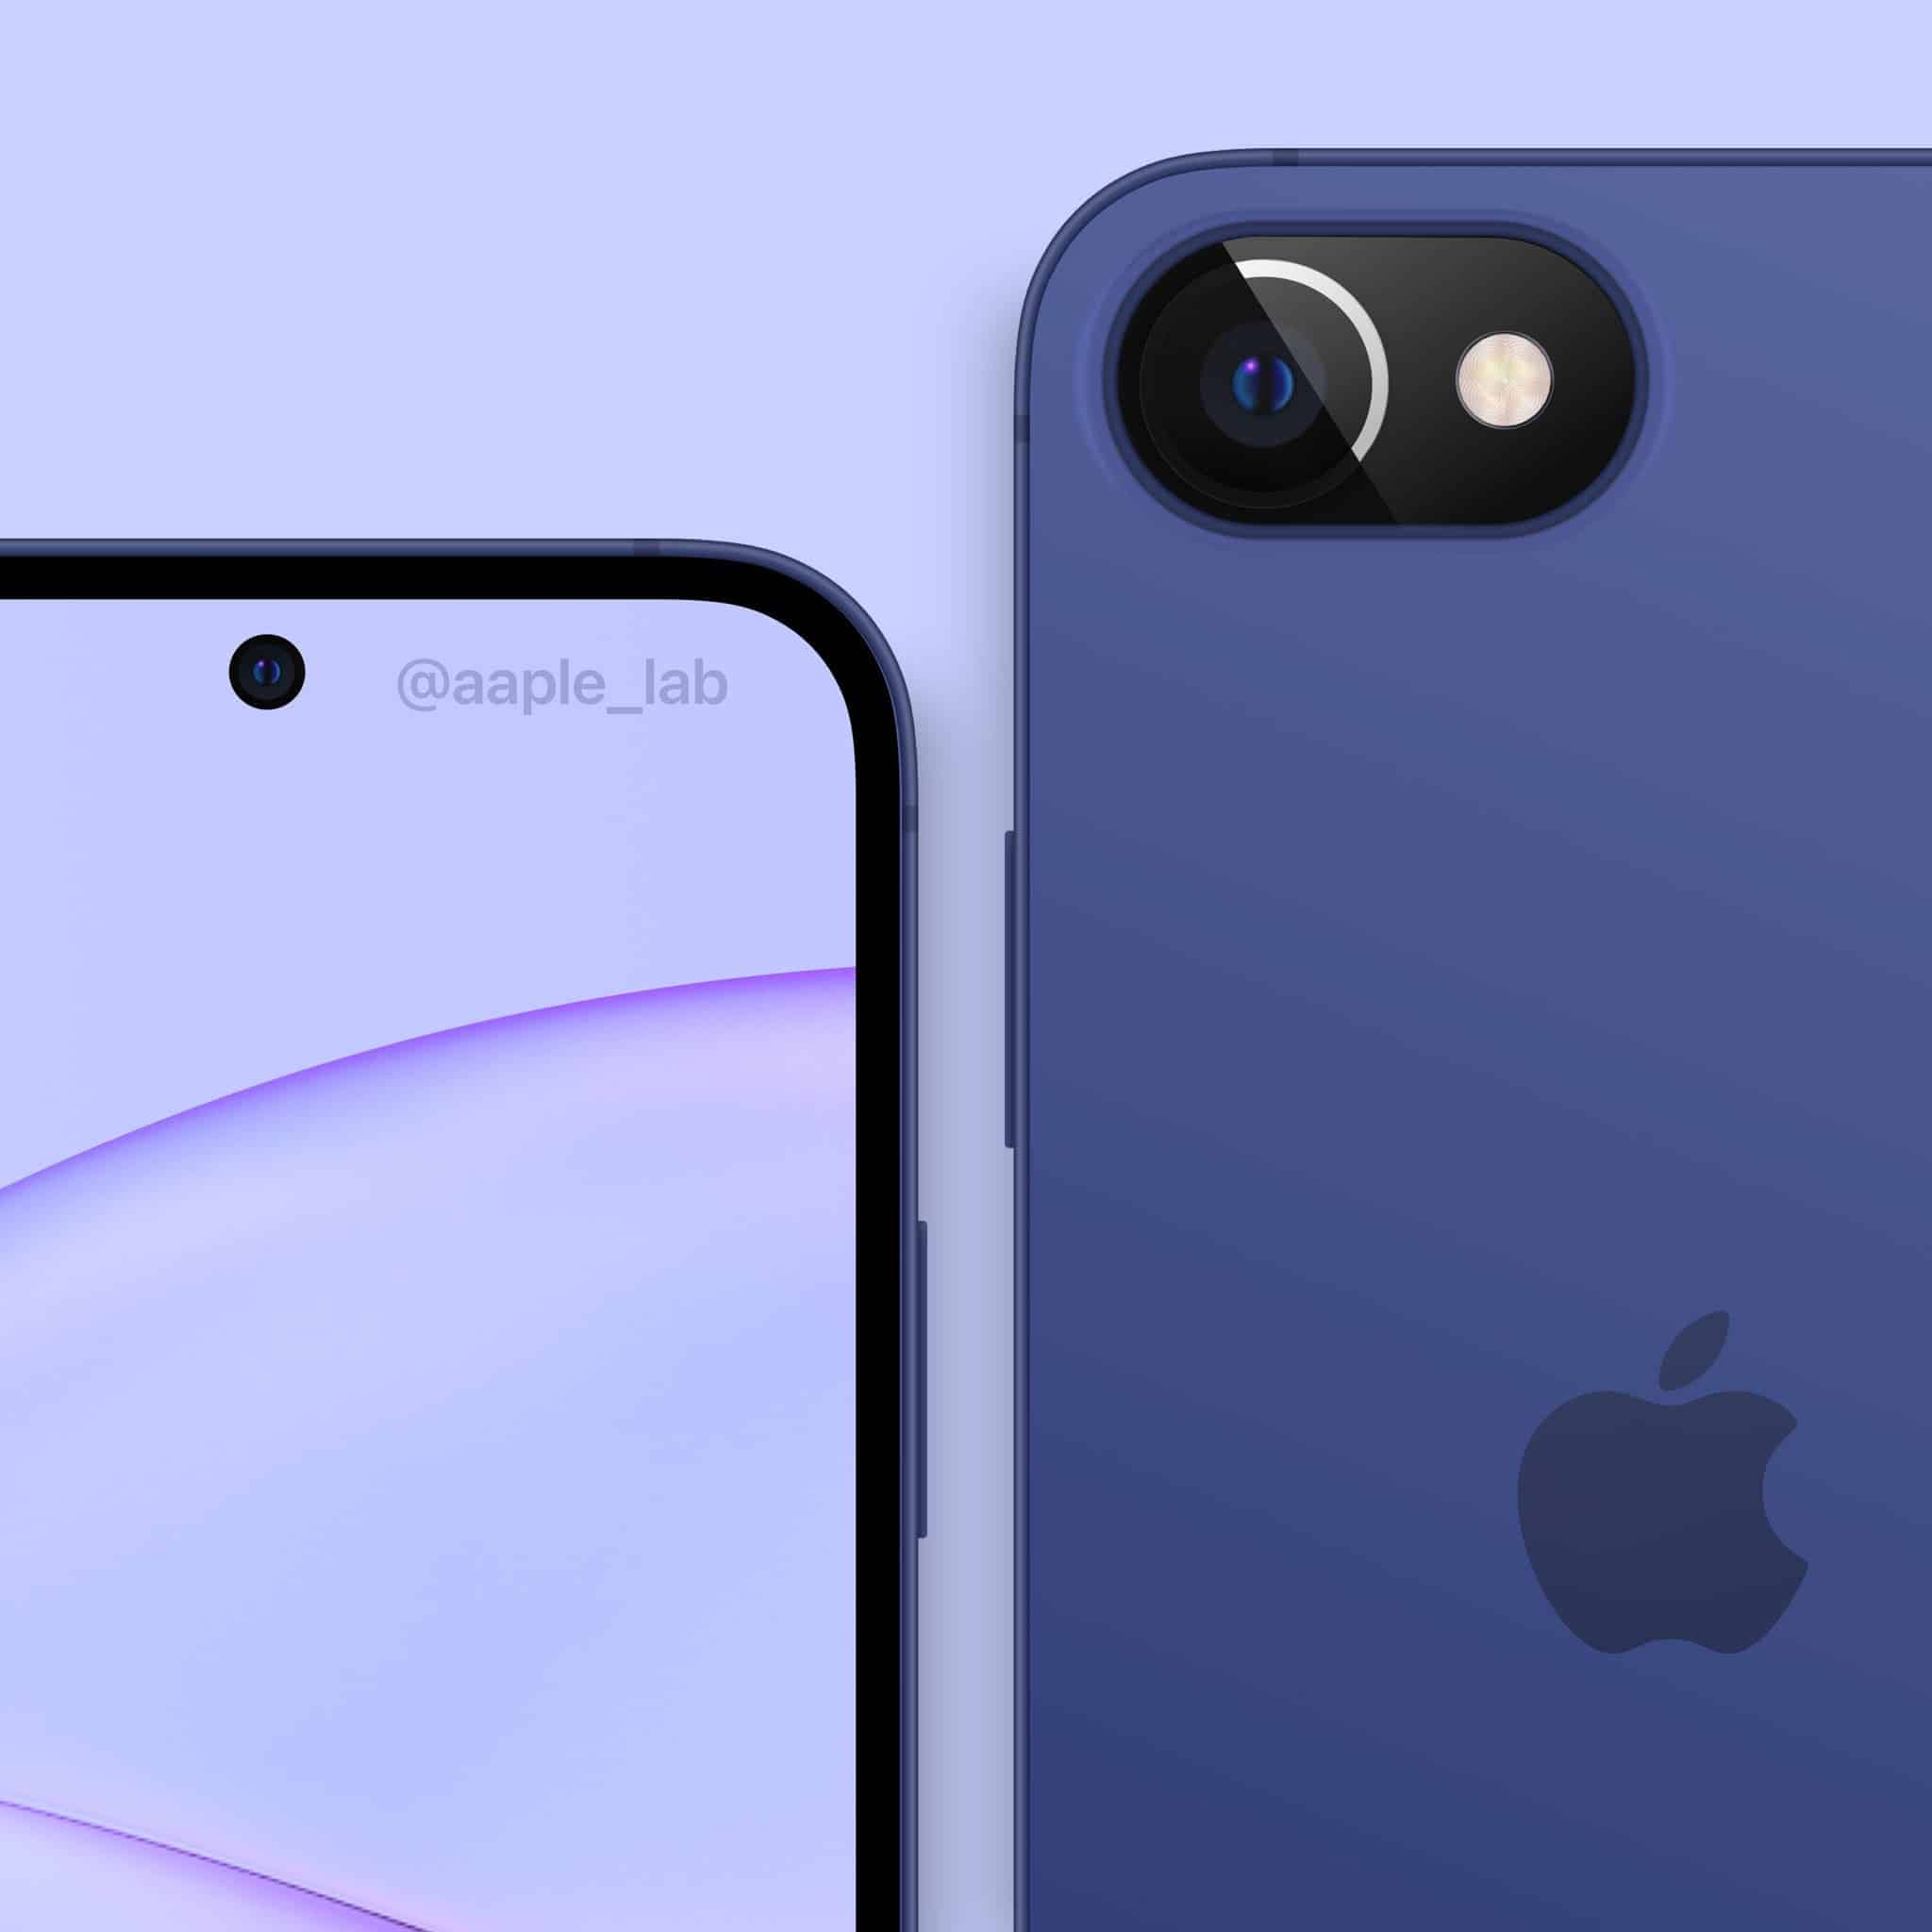 Will iPhone SE 2022 Copy The Xiaomi Phone Design?